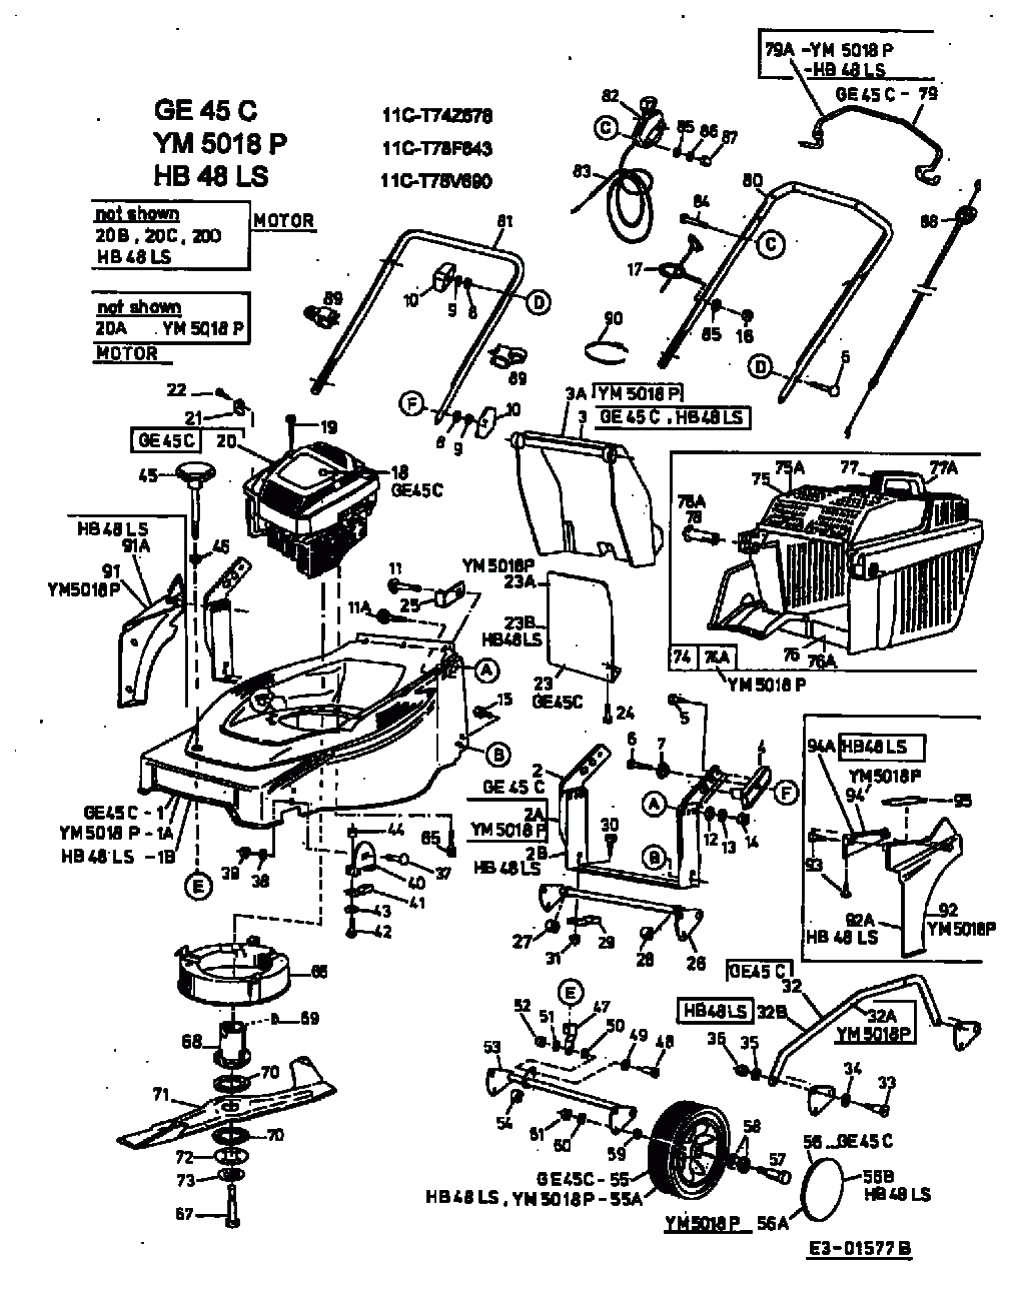 MTD Артикул 11C-T74Z678 (год выпуска 2002). Основная деталировка